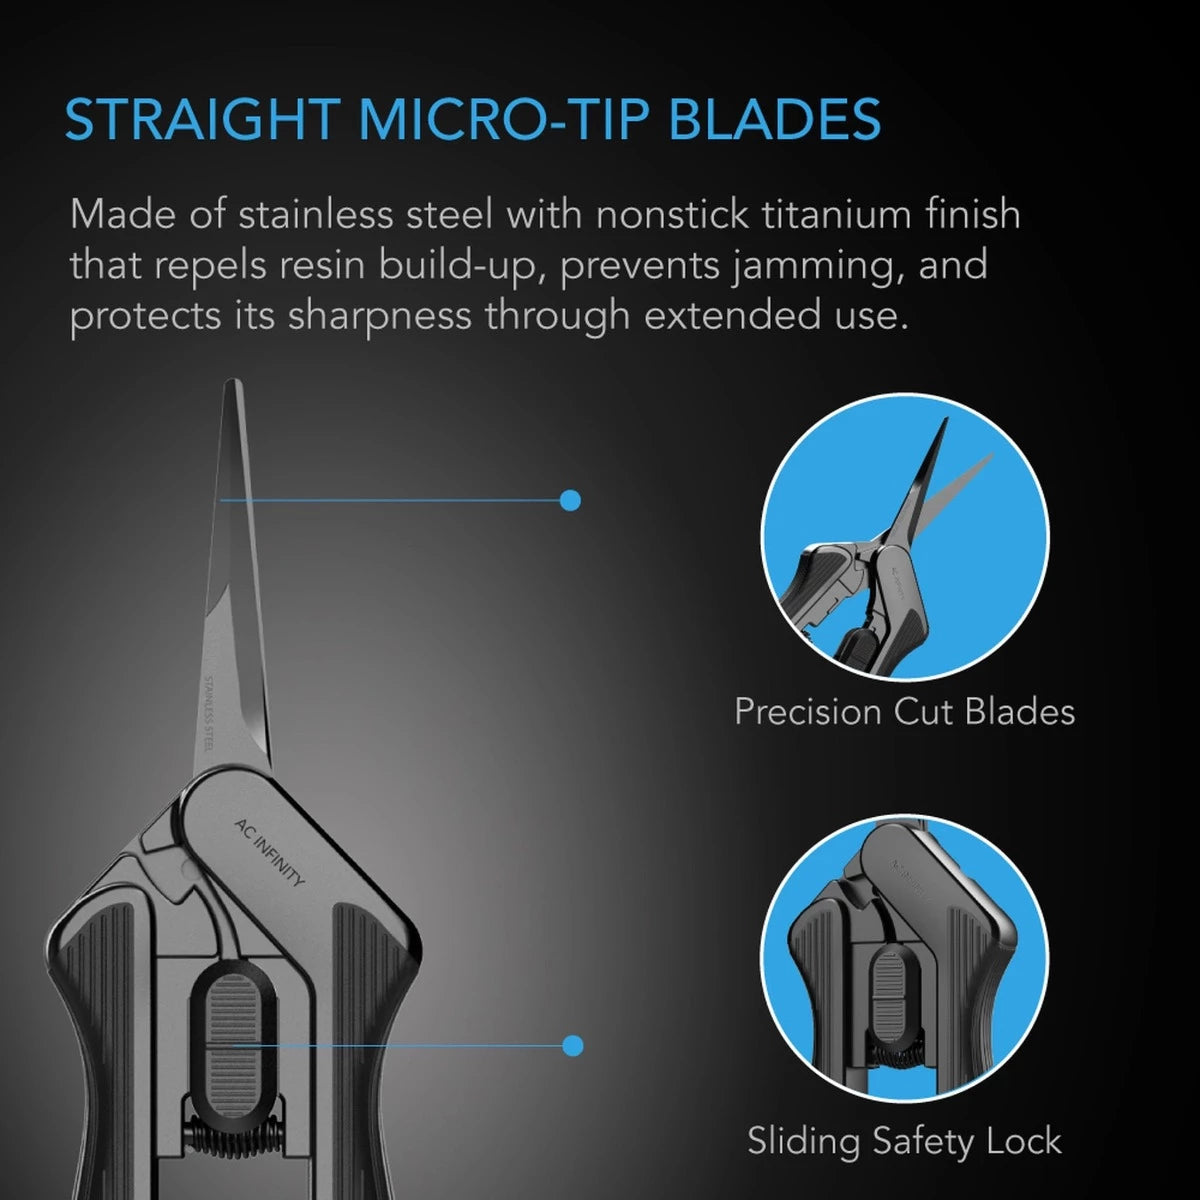 AC Infinity Straight Micro-tip blades